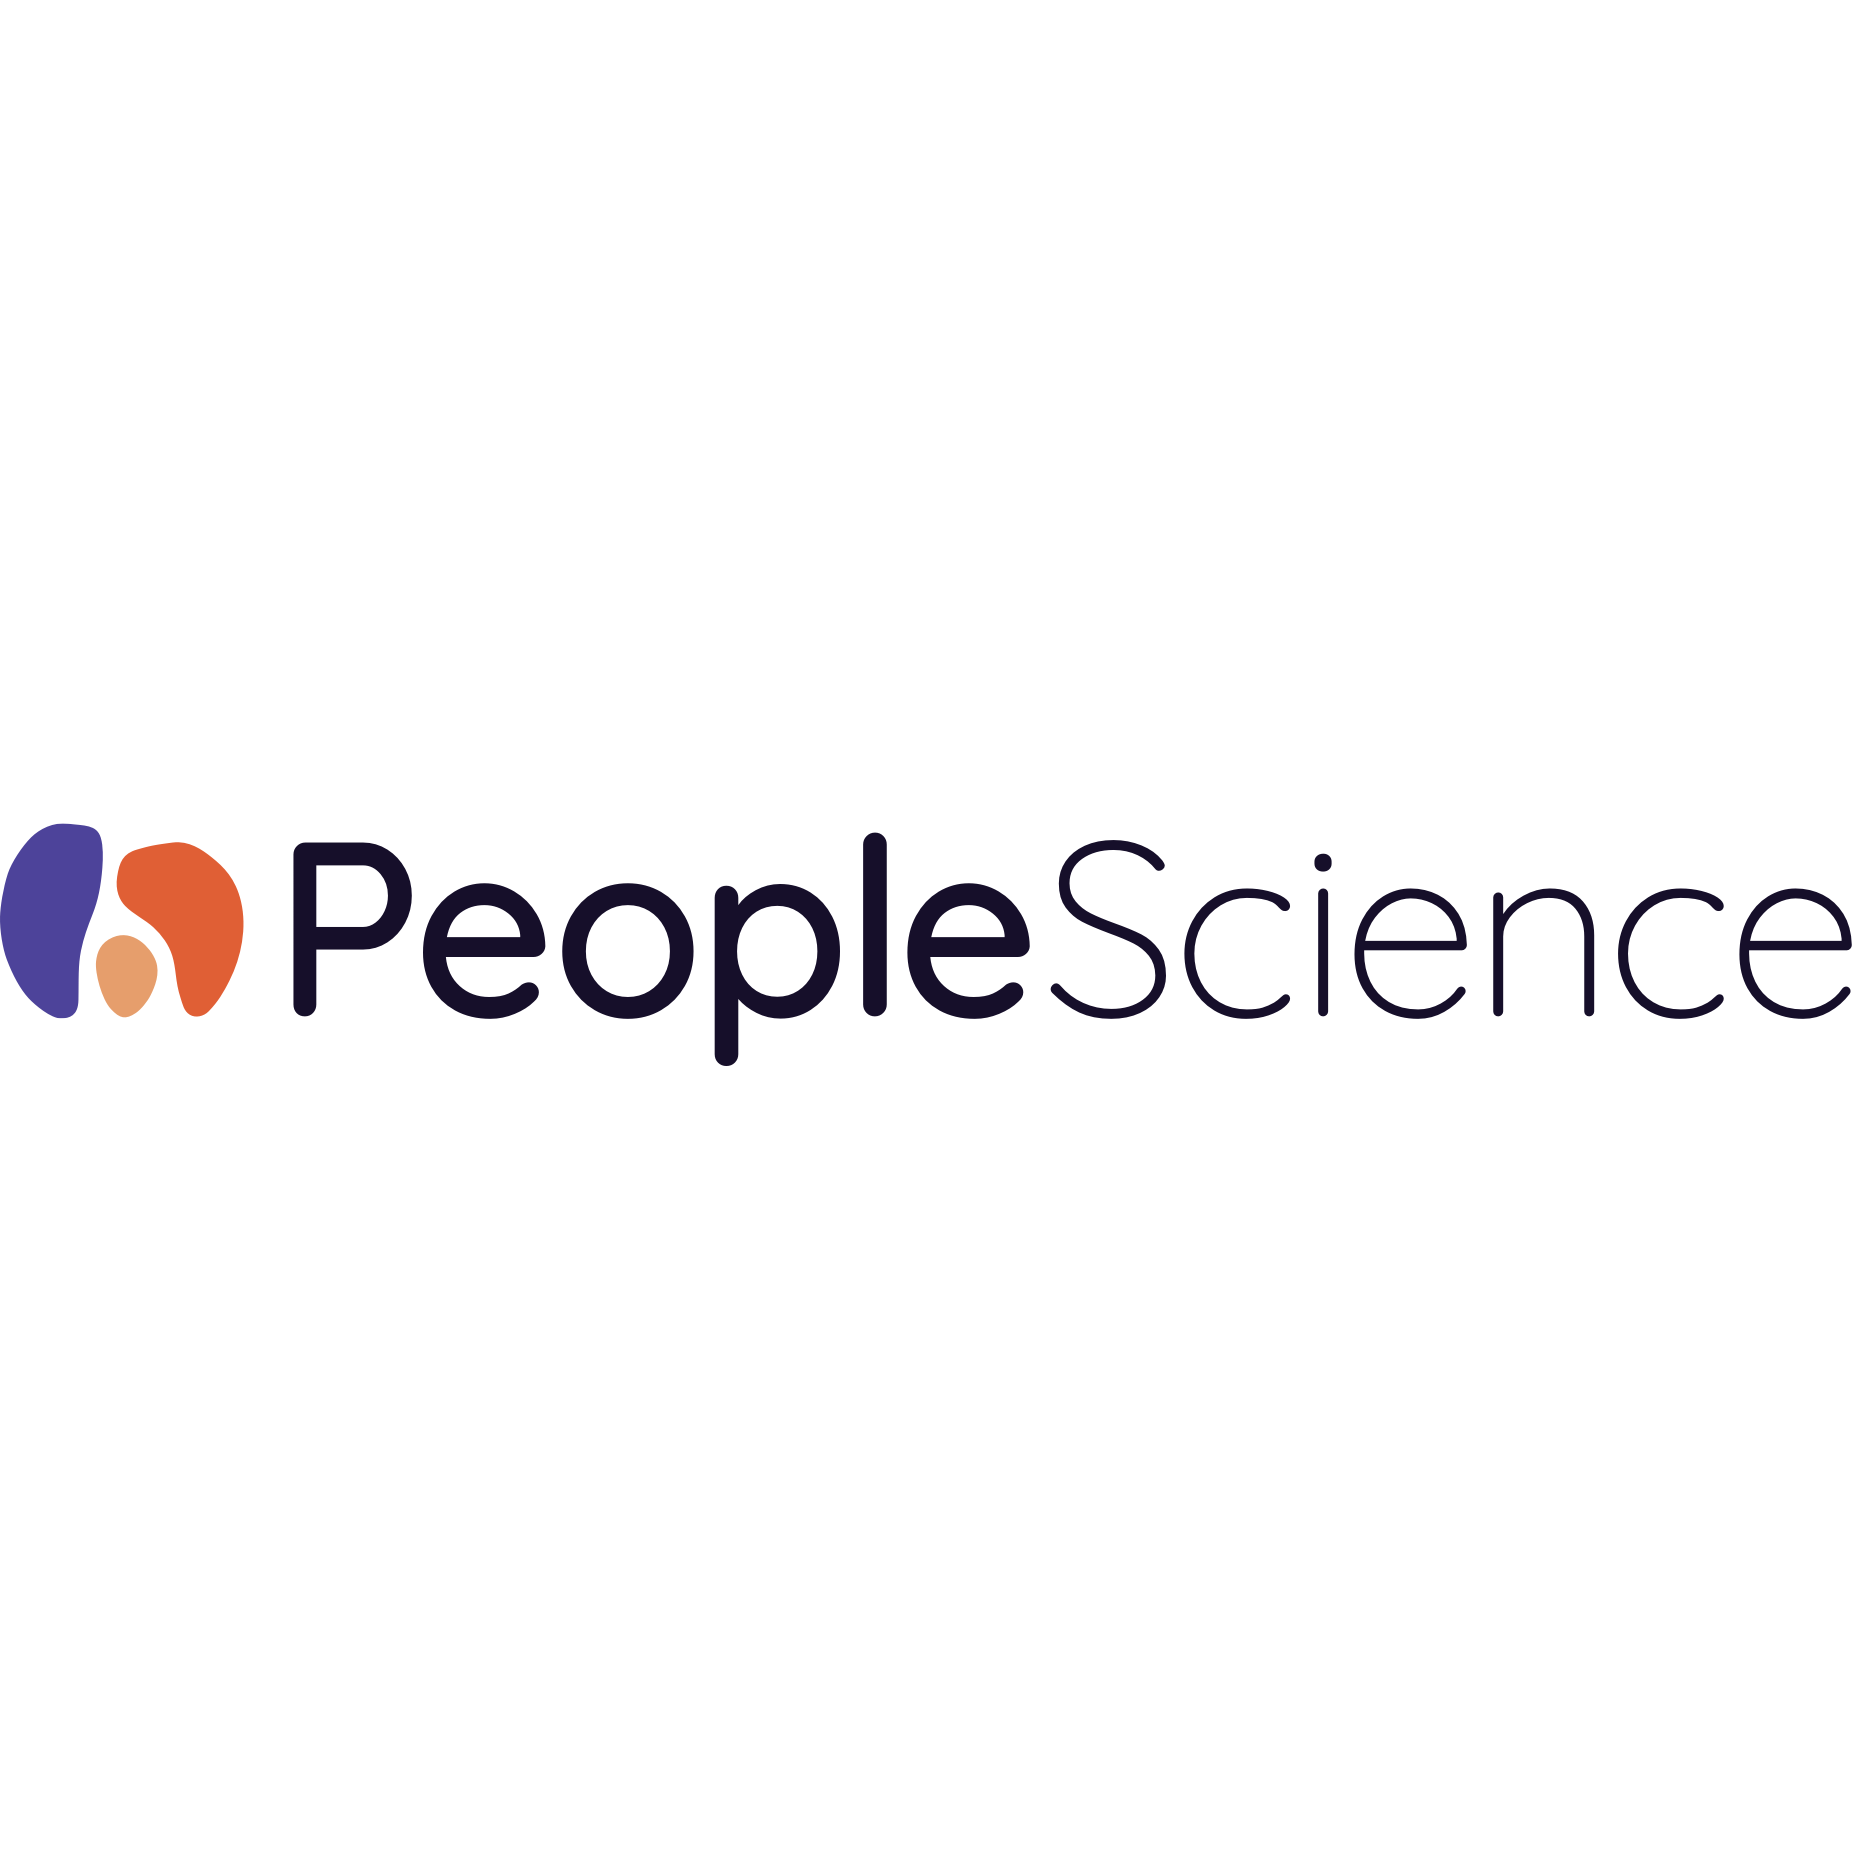 PeopleScience Logo.png